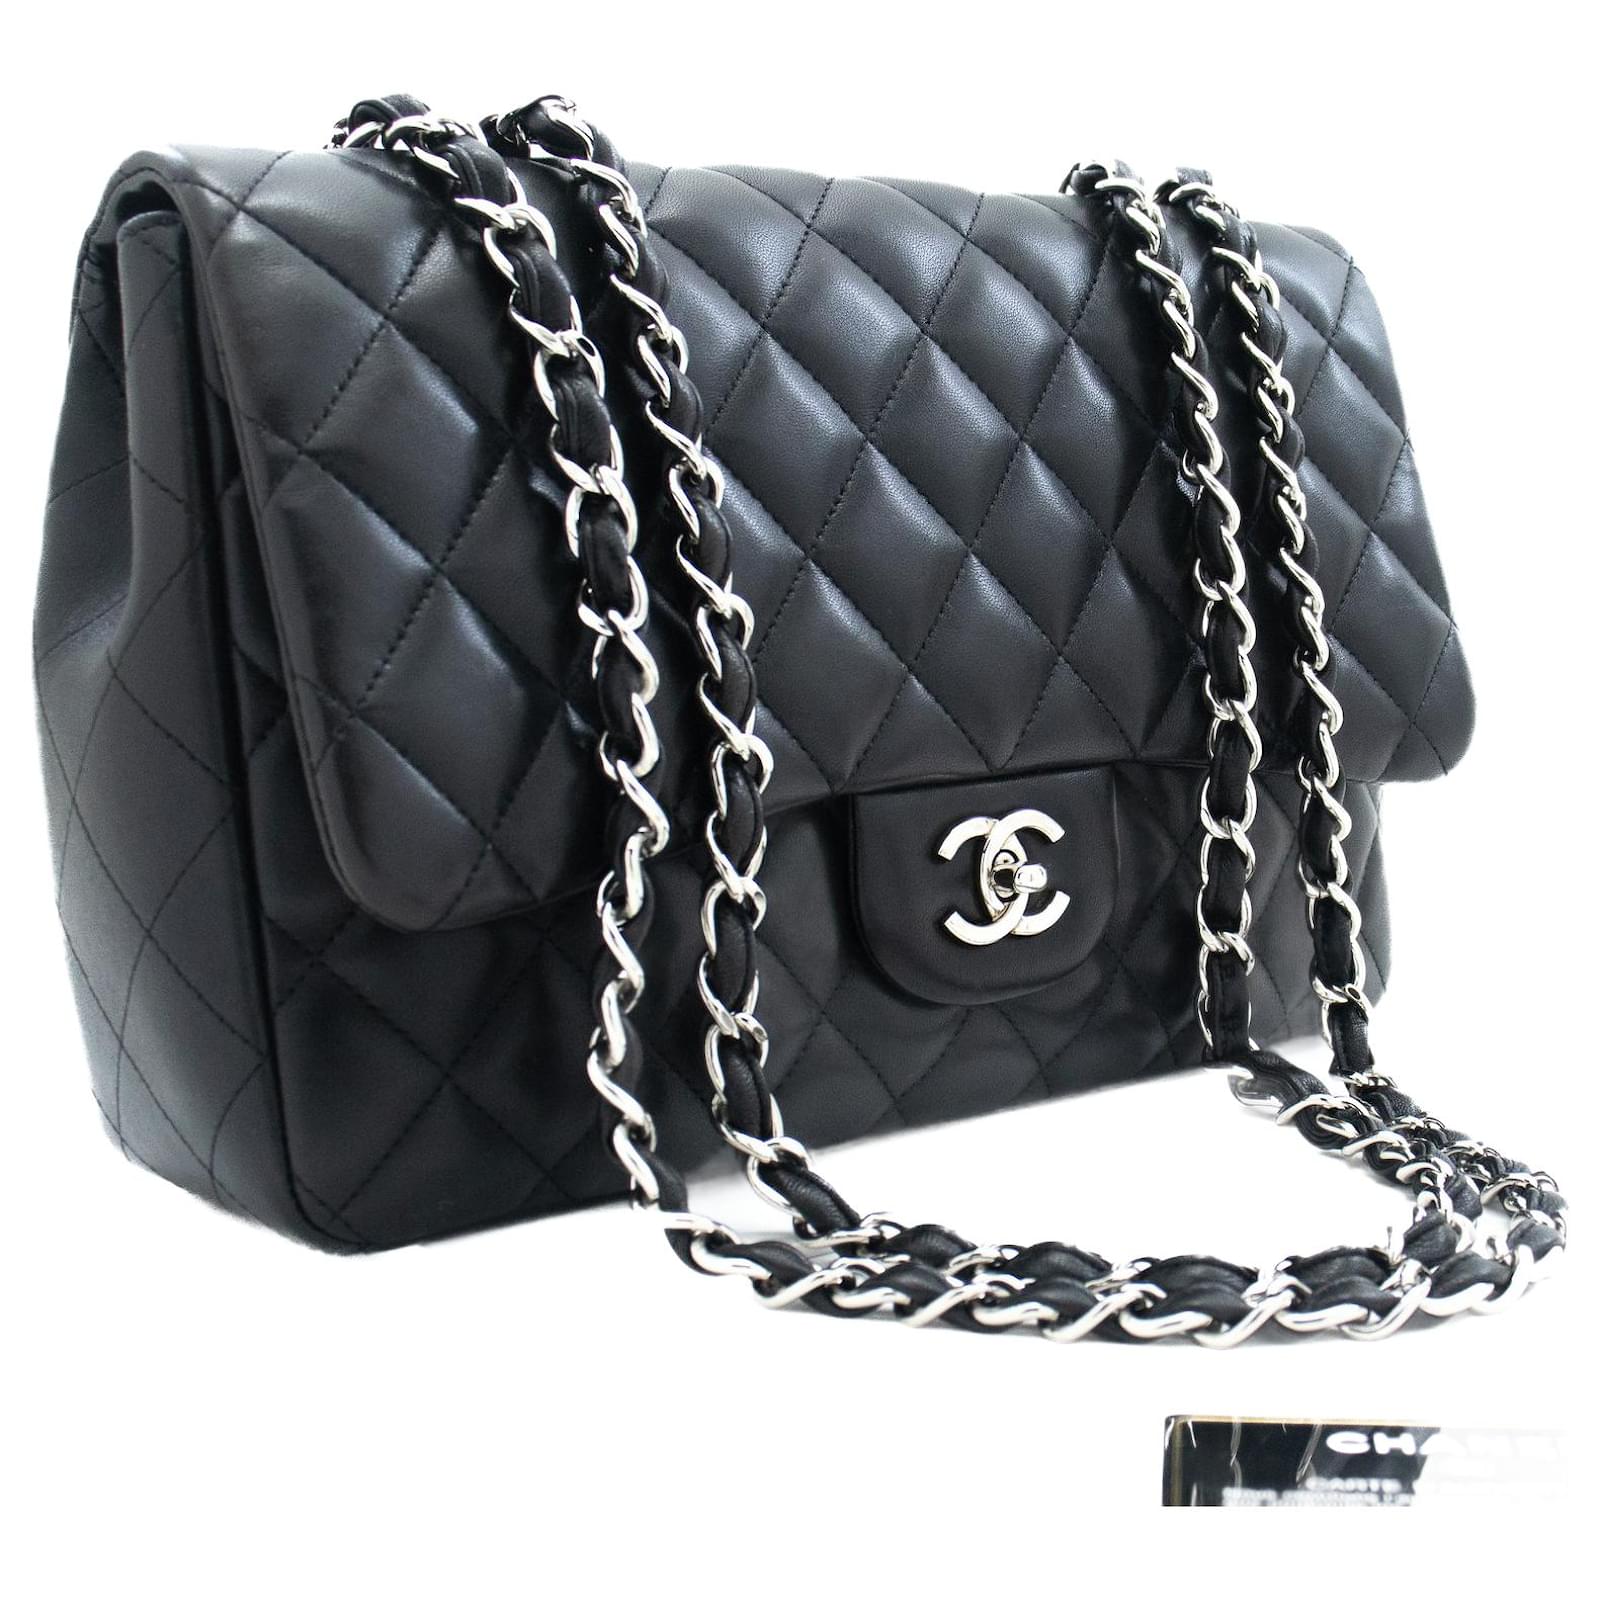 leather chanel purse black